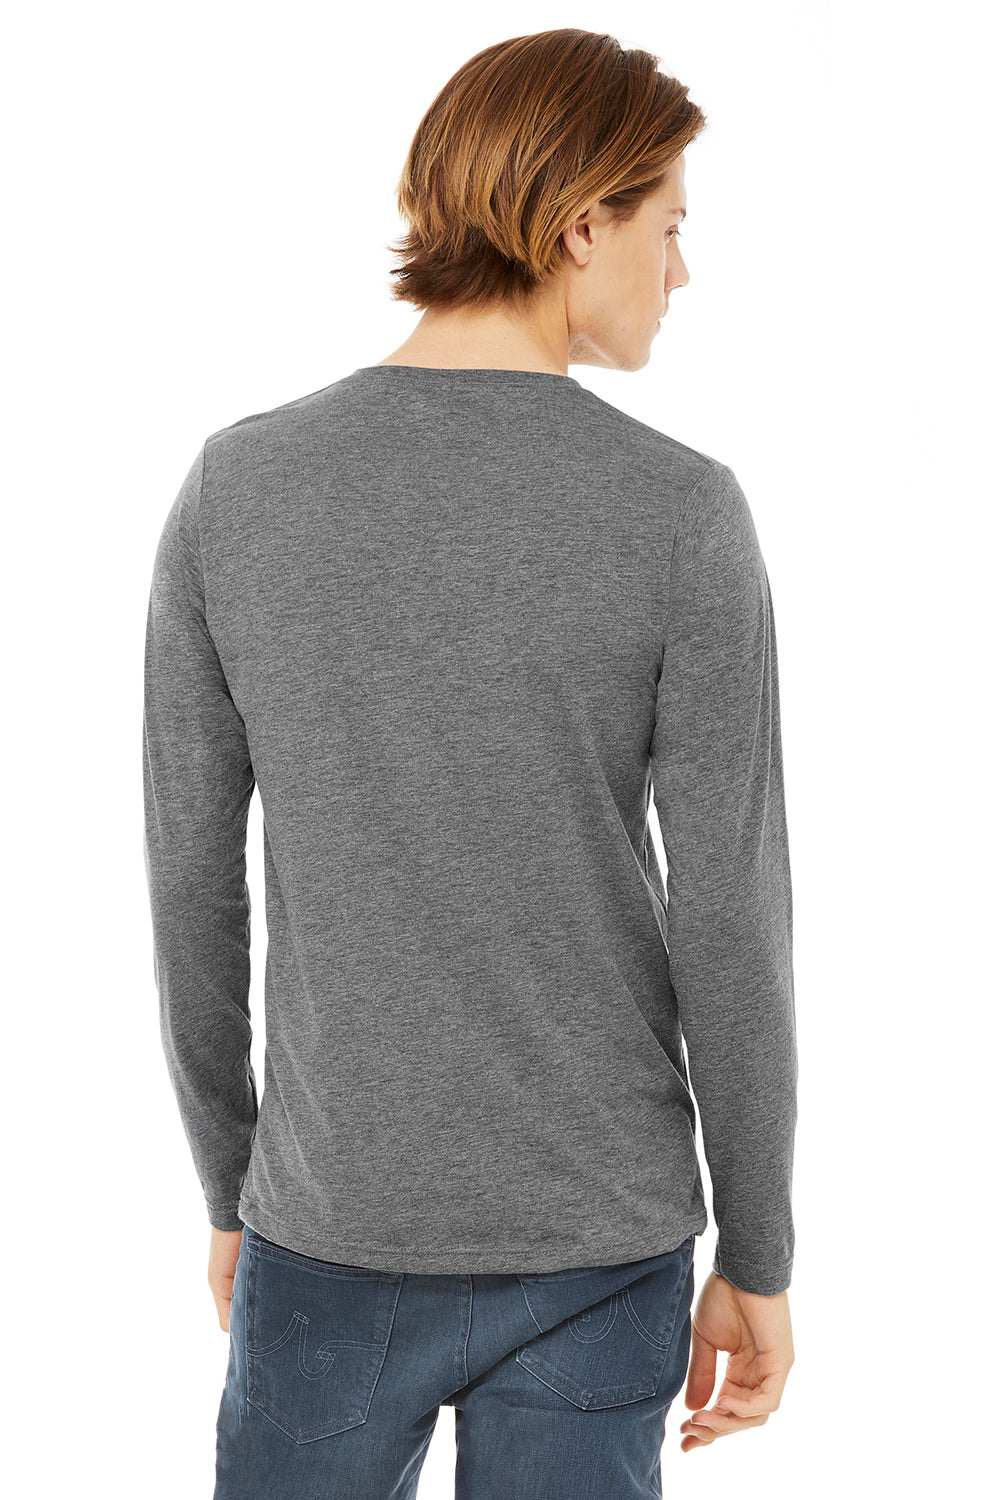 Bella + Canvas 3425 Mens Jersey Long Sleeve V-Neck T-Shirt Grey Back